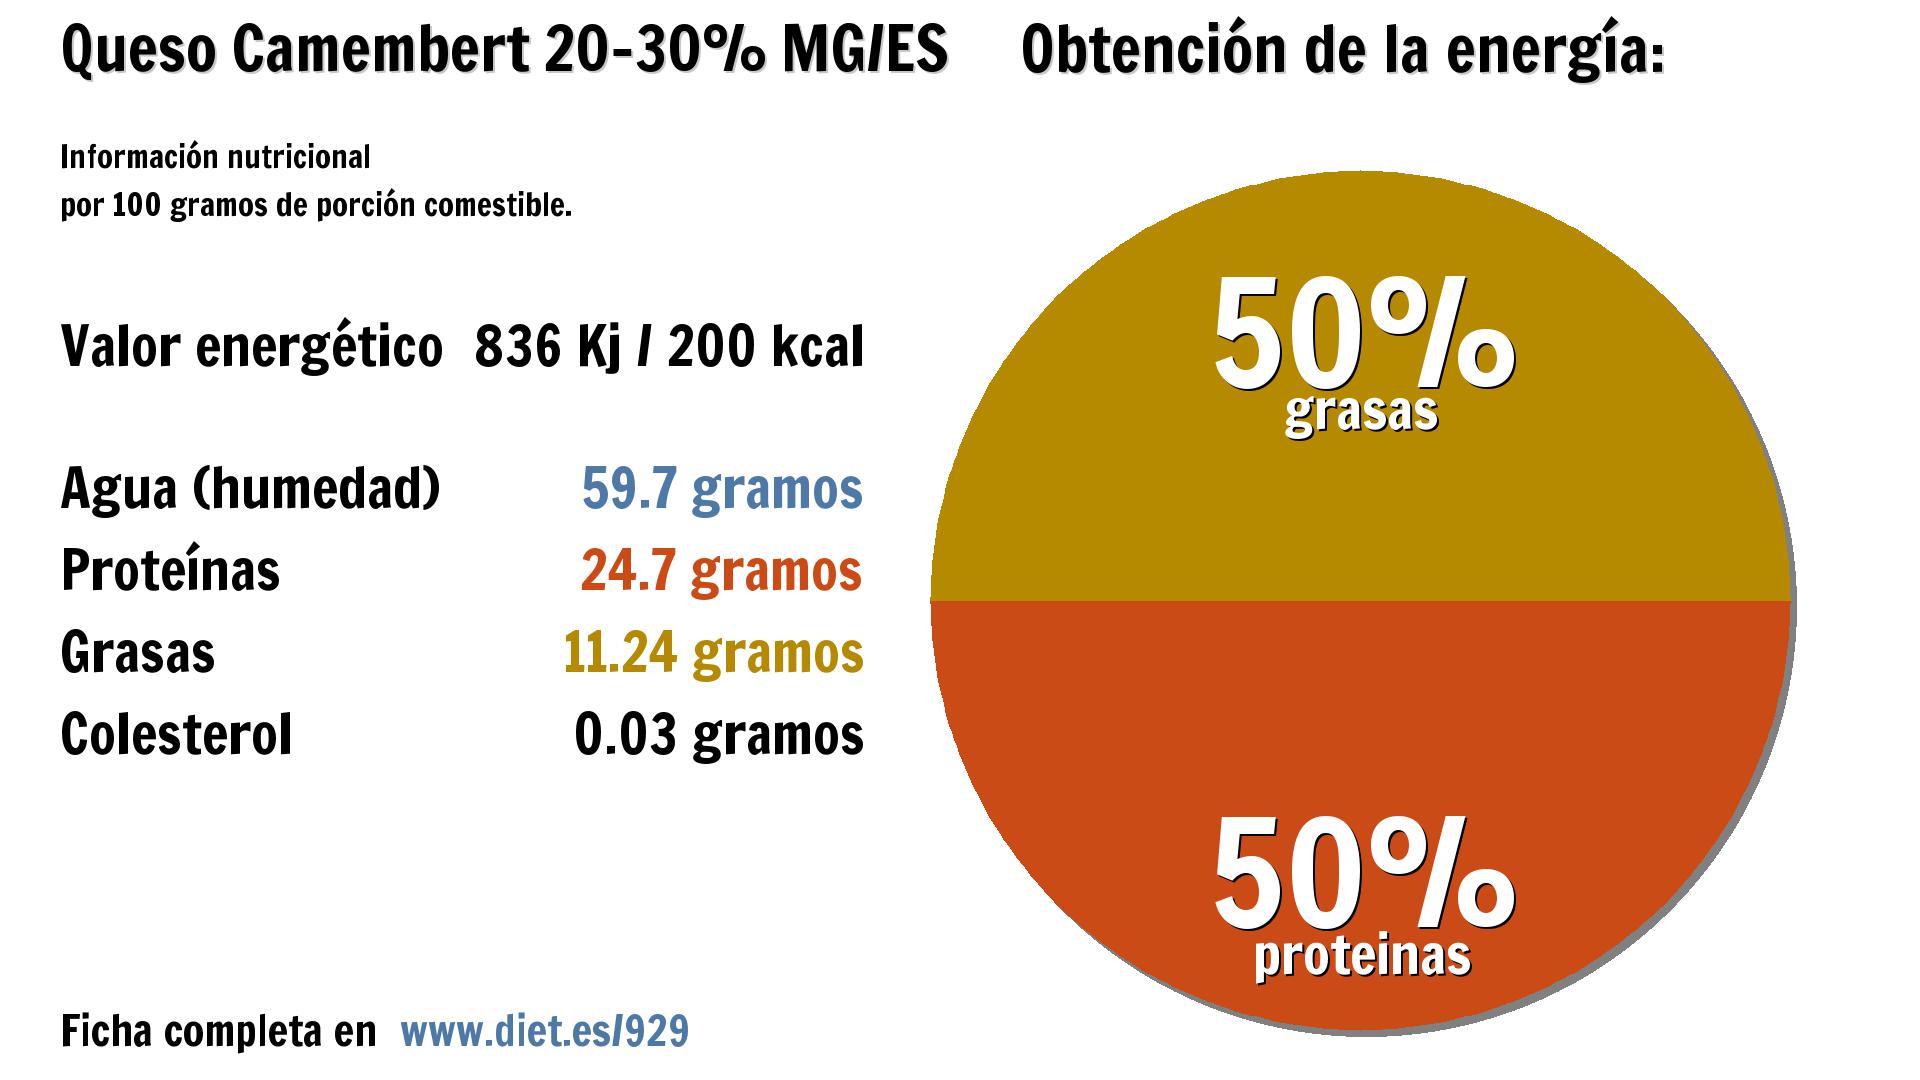 Queso Camembert 20-30% MG/ES: energía 836 Kj, agua 60 g., proteínas 25 g. y grasas 11 g.